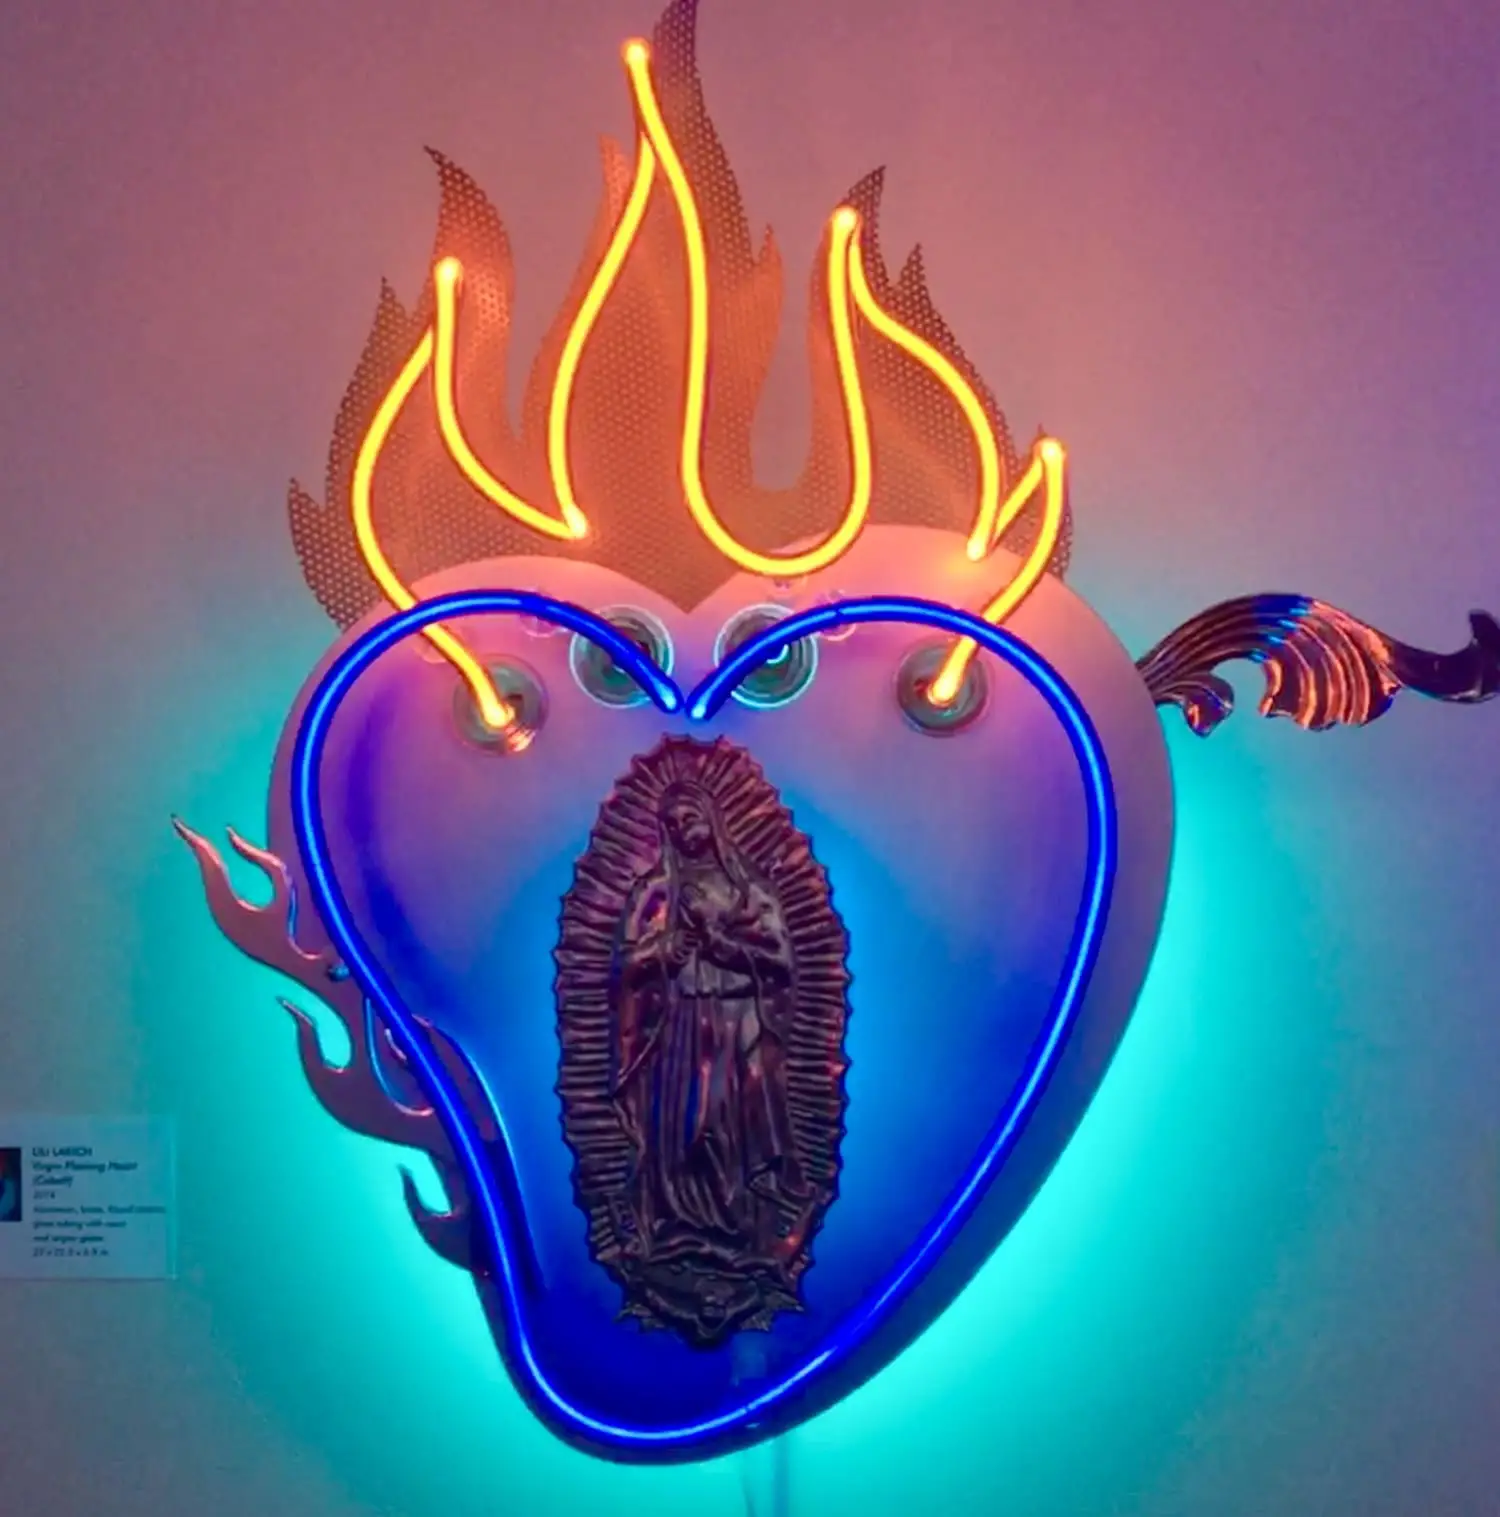 Trap Street | Darkness Comes Alive | Chad Eschman Interview Immersive art exhibit Lili Lakich neon studio art